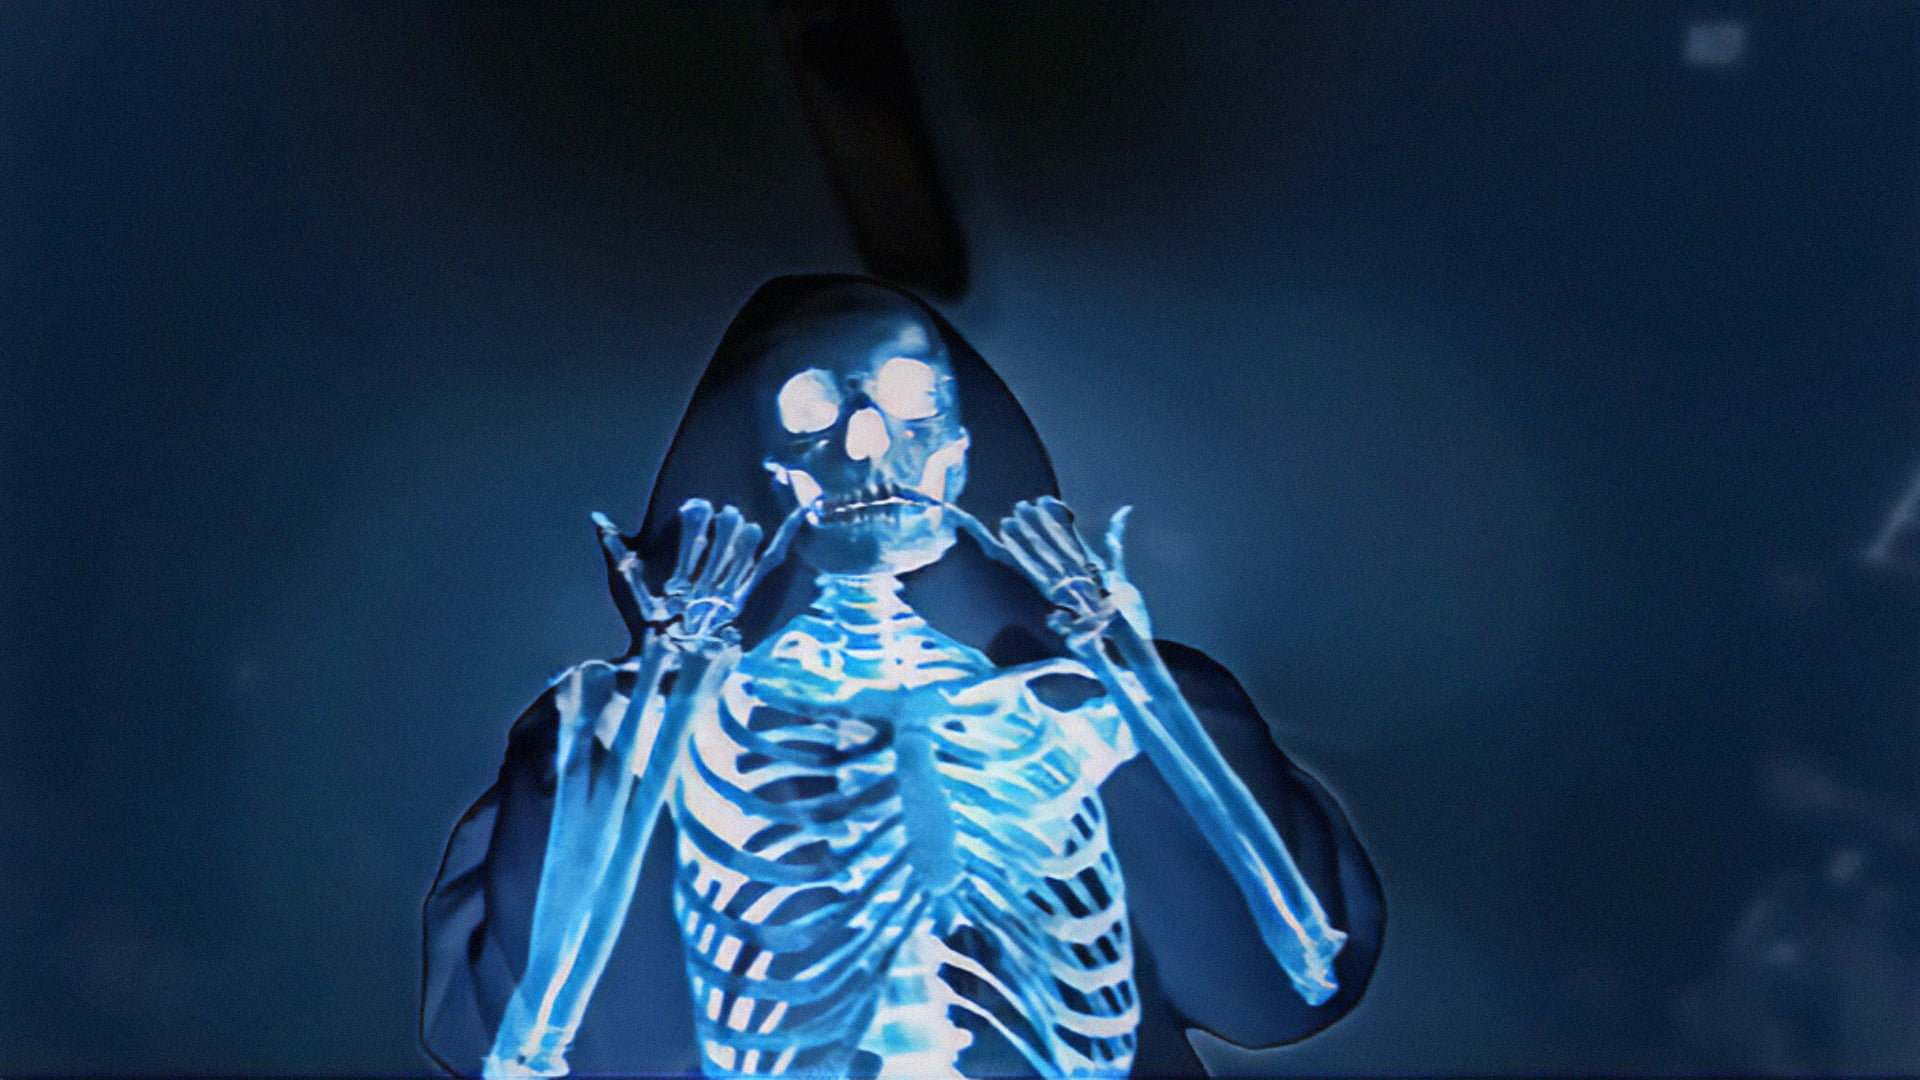 rondodasosa, Rapper, drill, skeleton, x-rays, skull, simple background